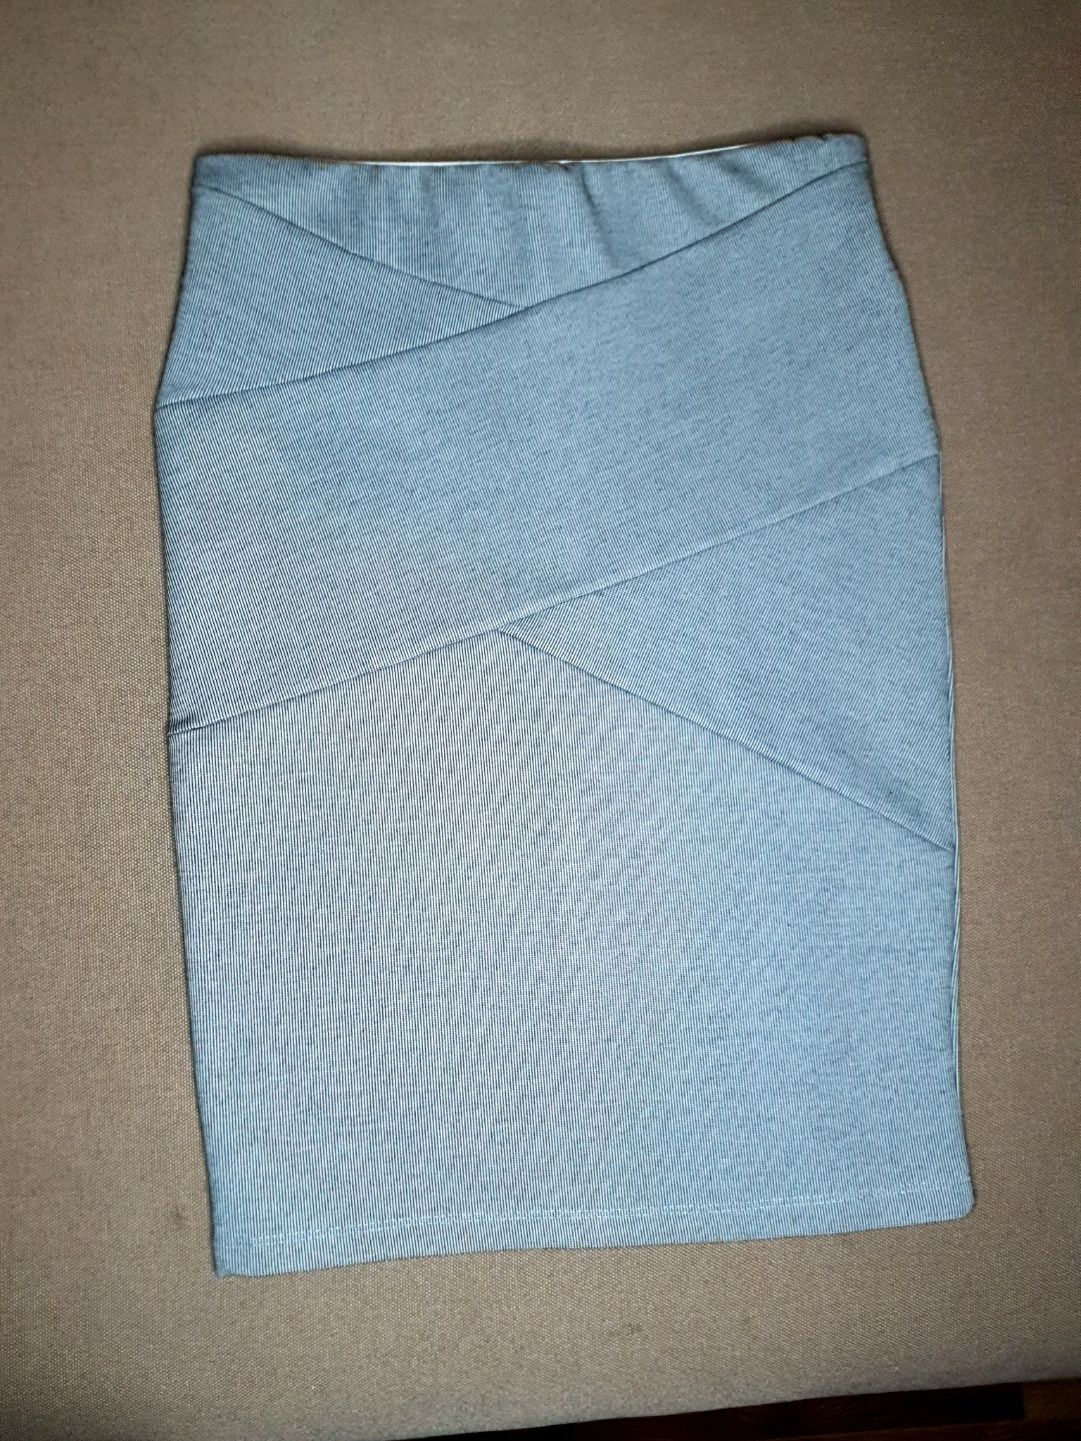 Спідниця (юбка) сіра базова класична Colin's